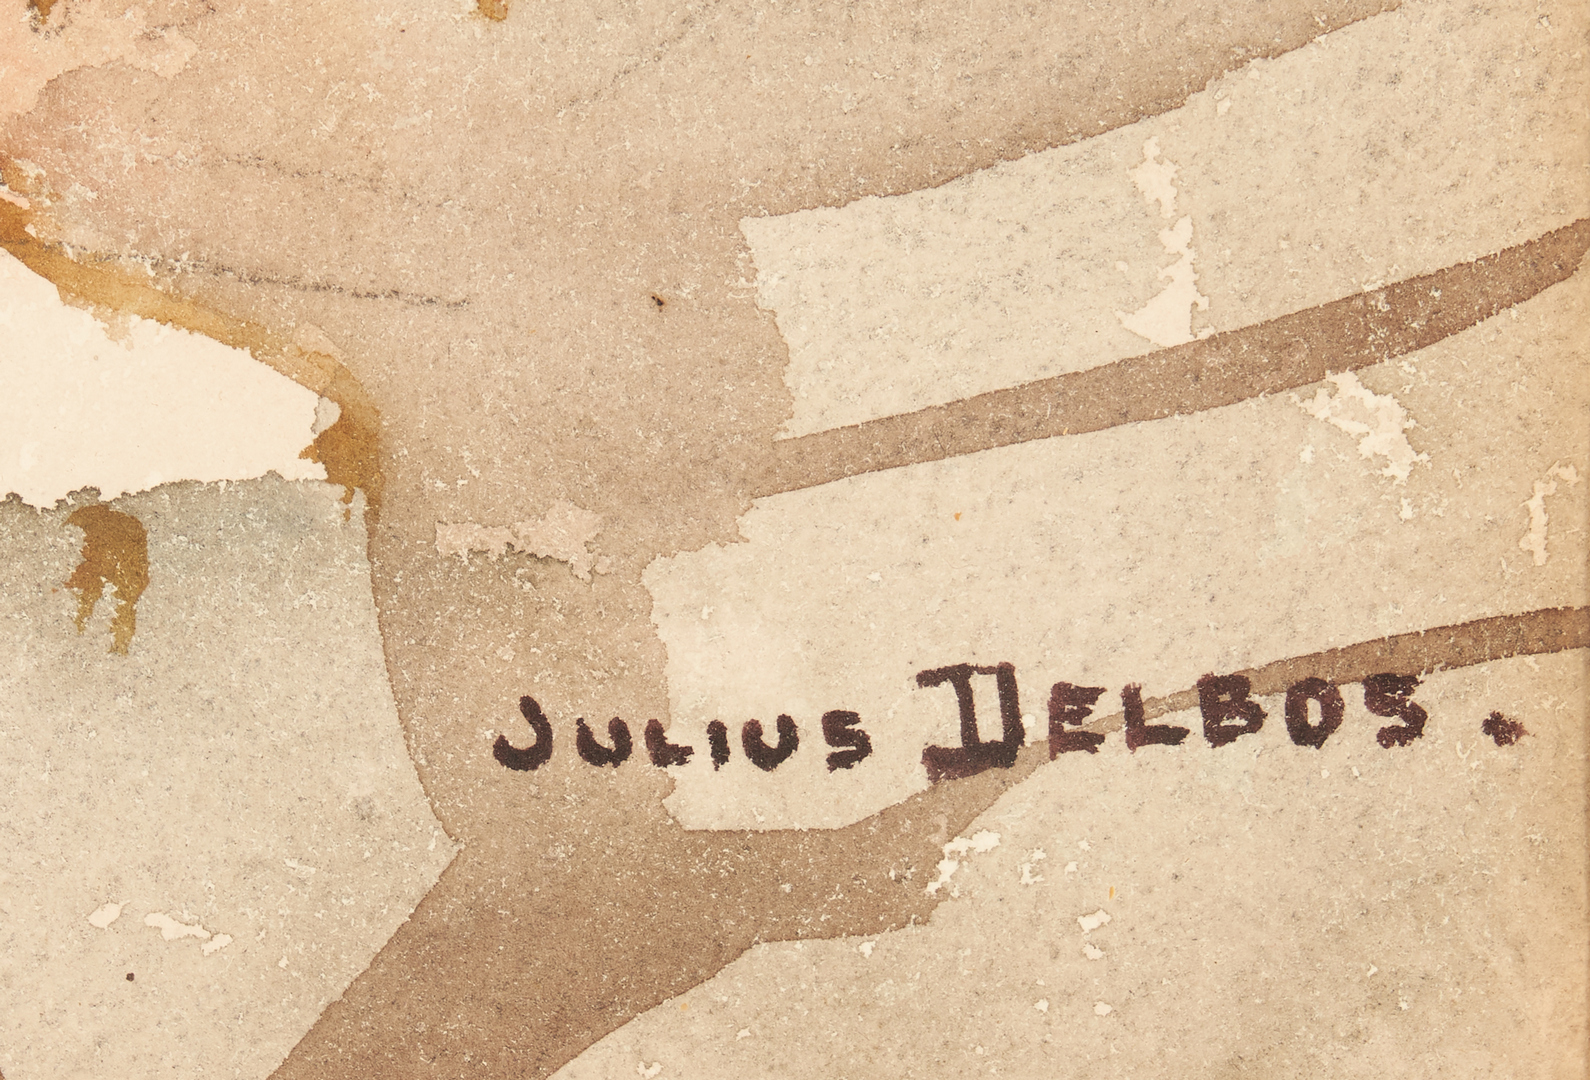 Lot 368: Julius Maximilian Delbos W/C, Old Quarry, Lanesville, Mass